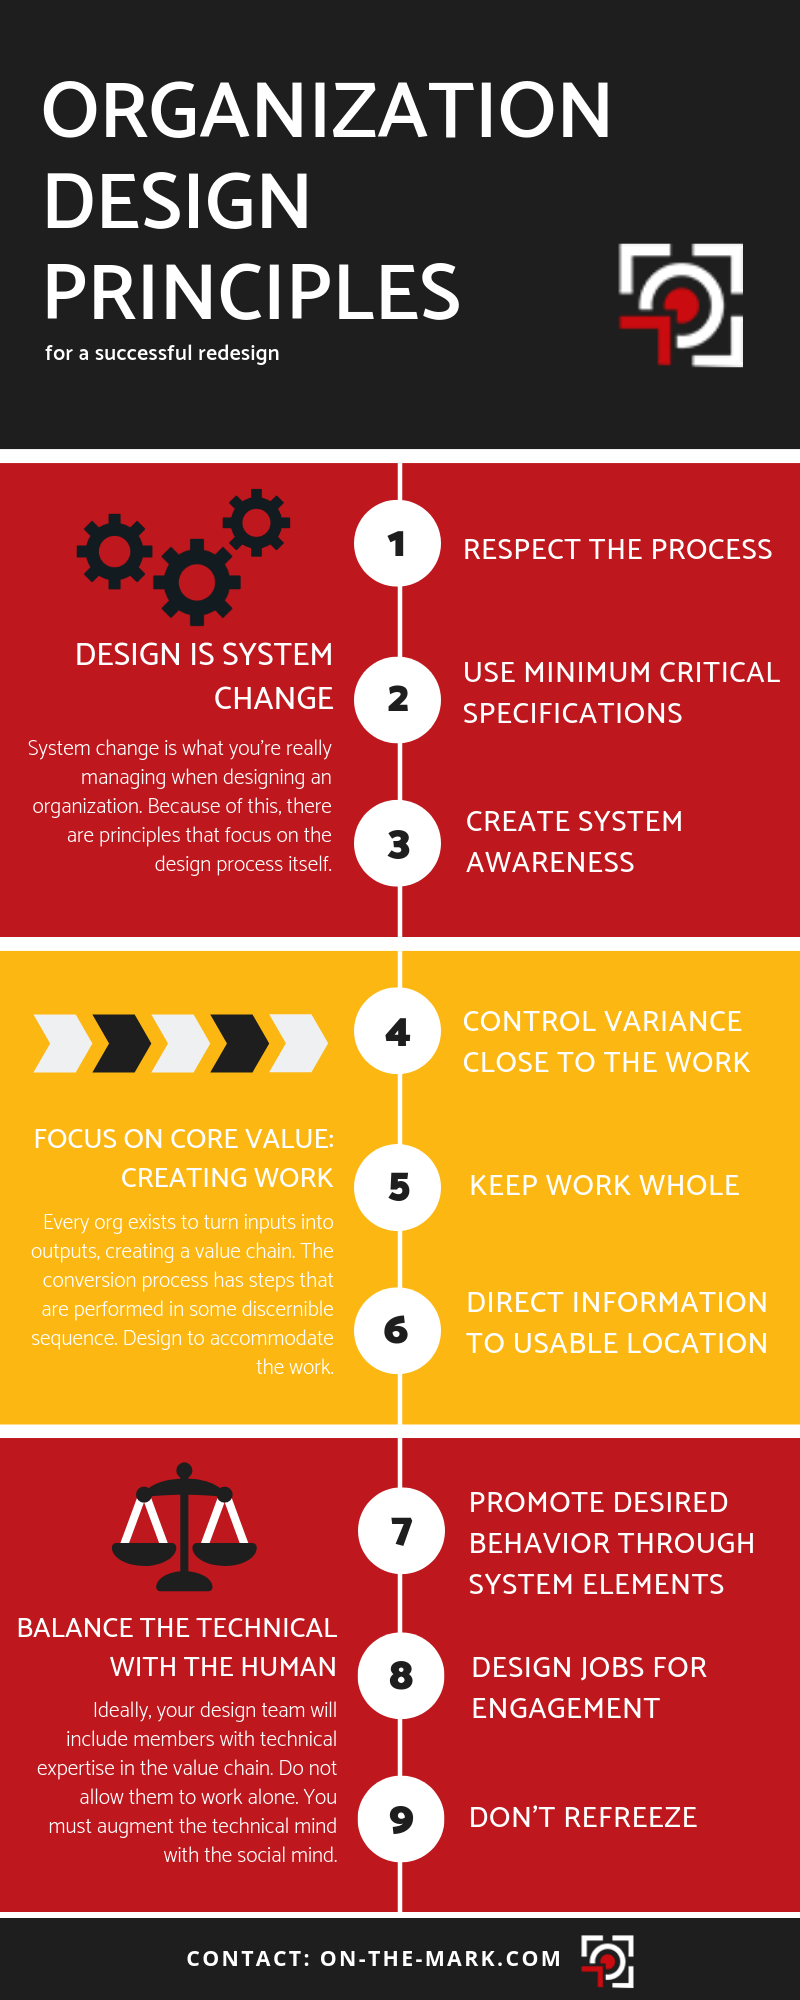 organization design principles infographic